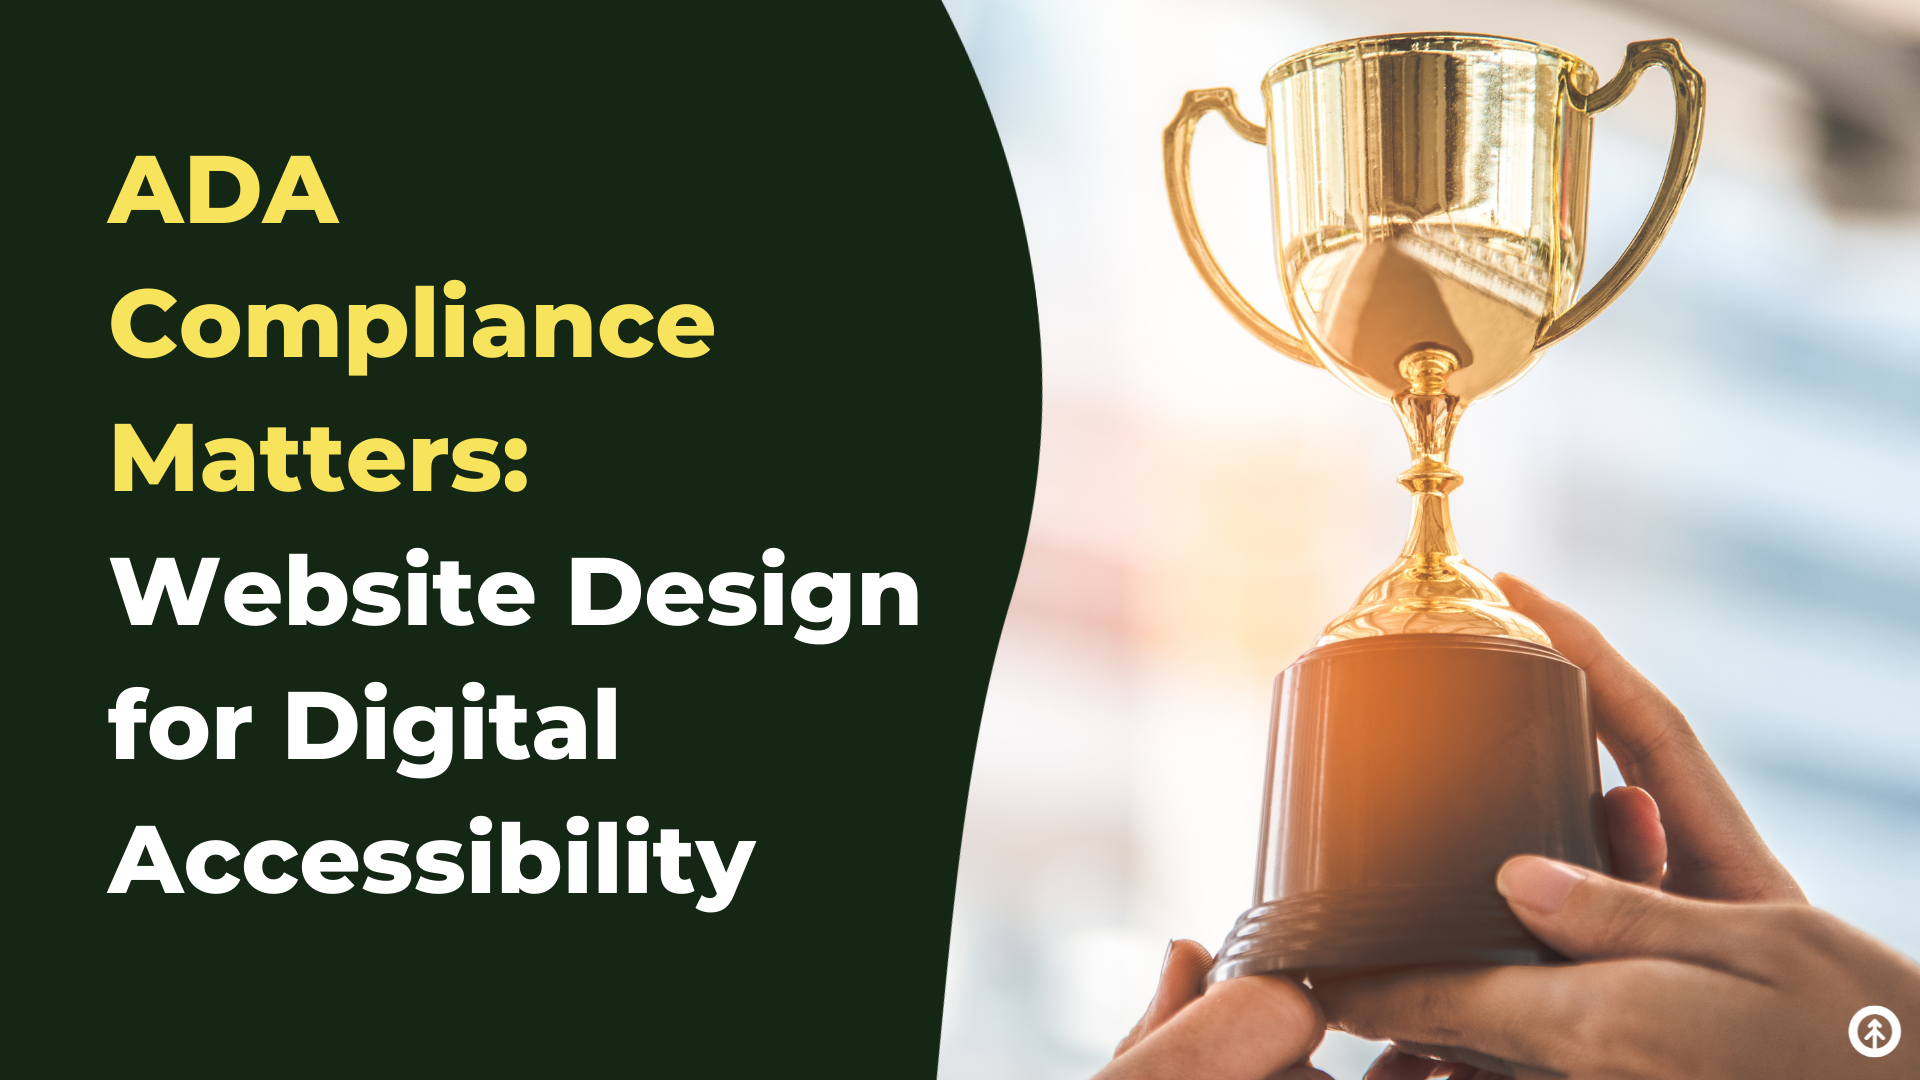 ADA Compliance Matters: Website Design for Digital Accessibility